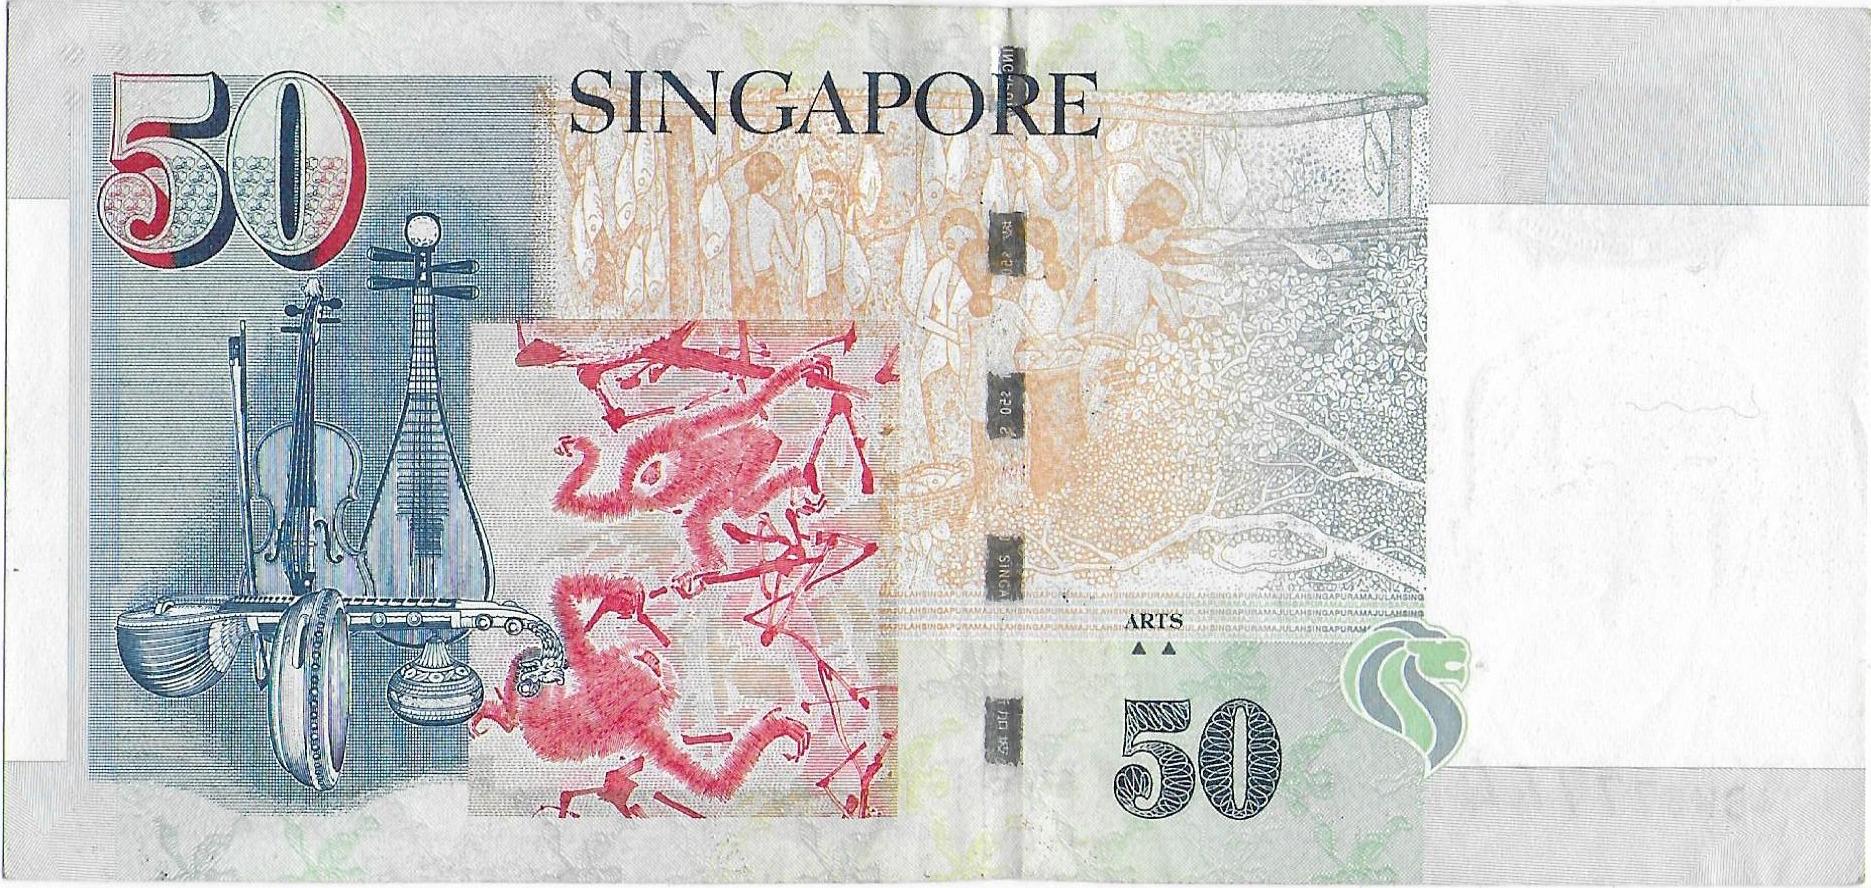 Singapore 50 Dollars back.jpg